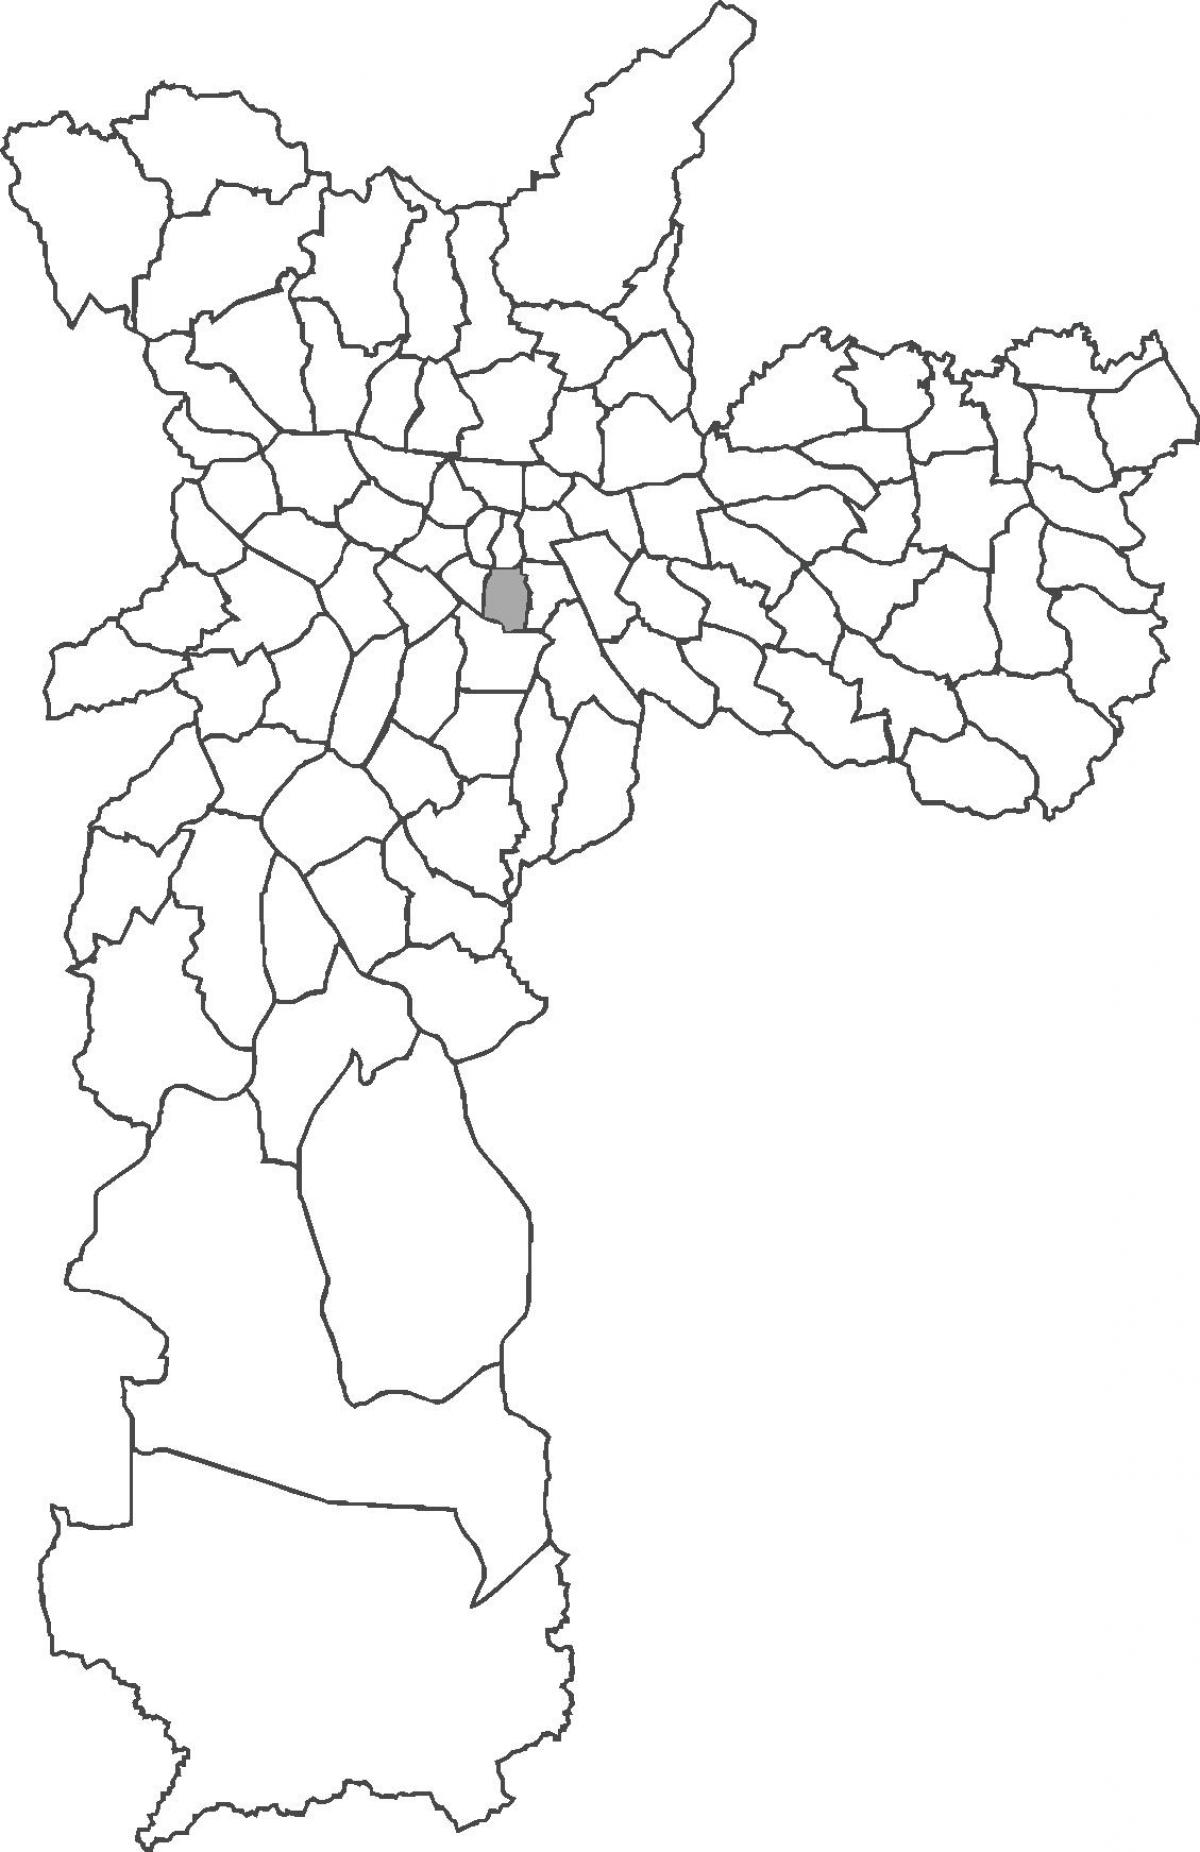 Peta dari Liberdade kabupaten